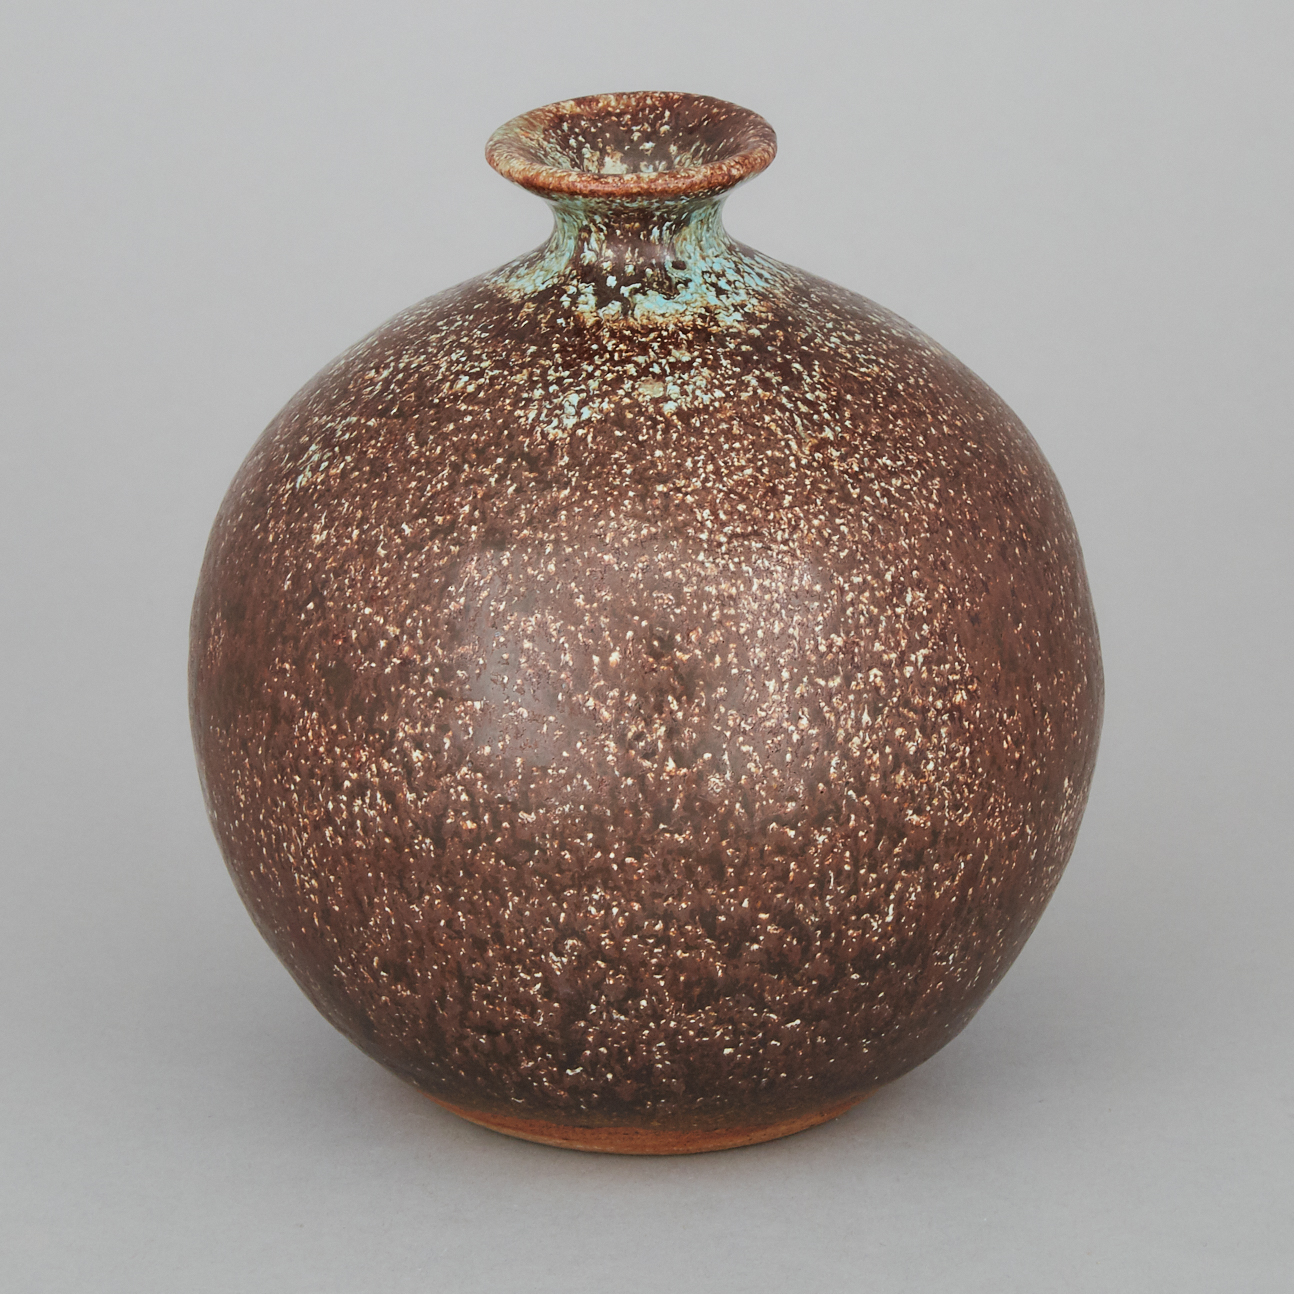 Tessa Kidick (Canadian, 1915-2002), Stoneware Vase, c.1965